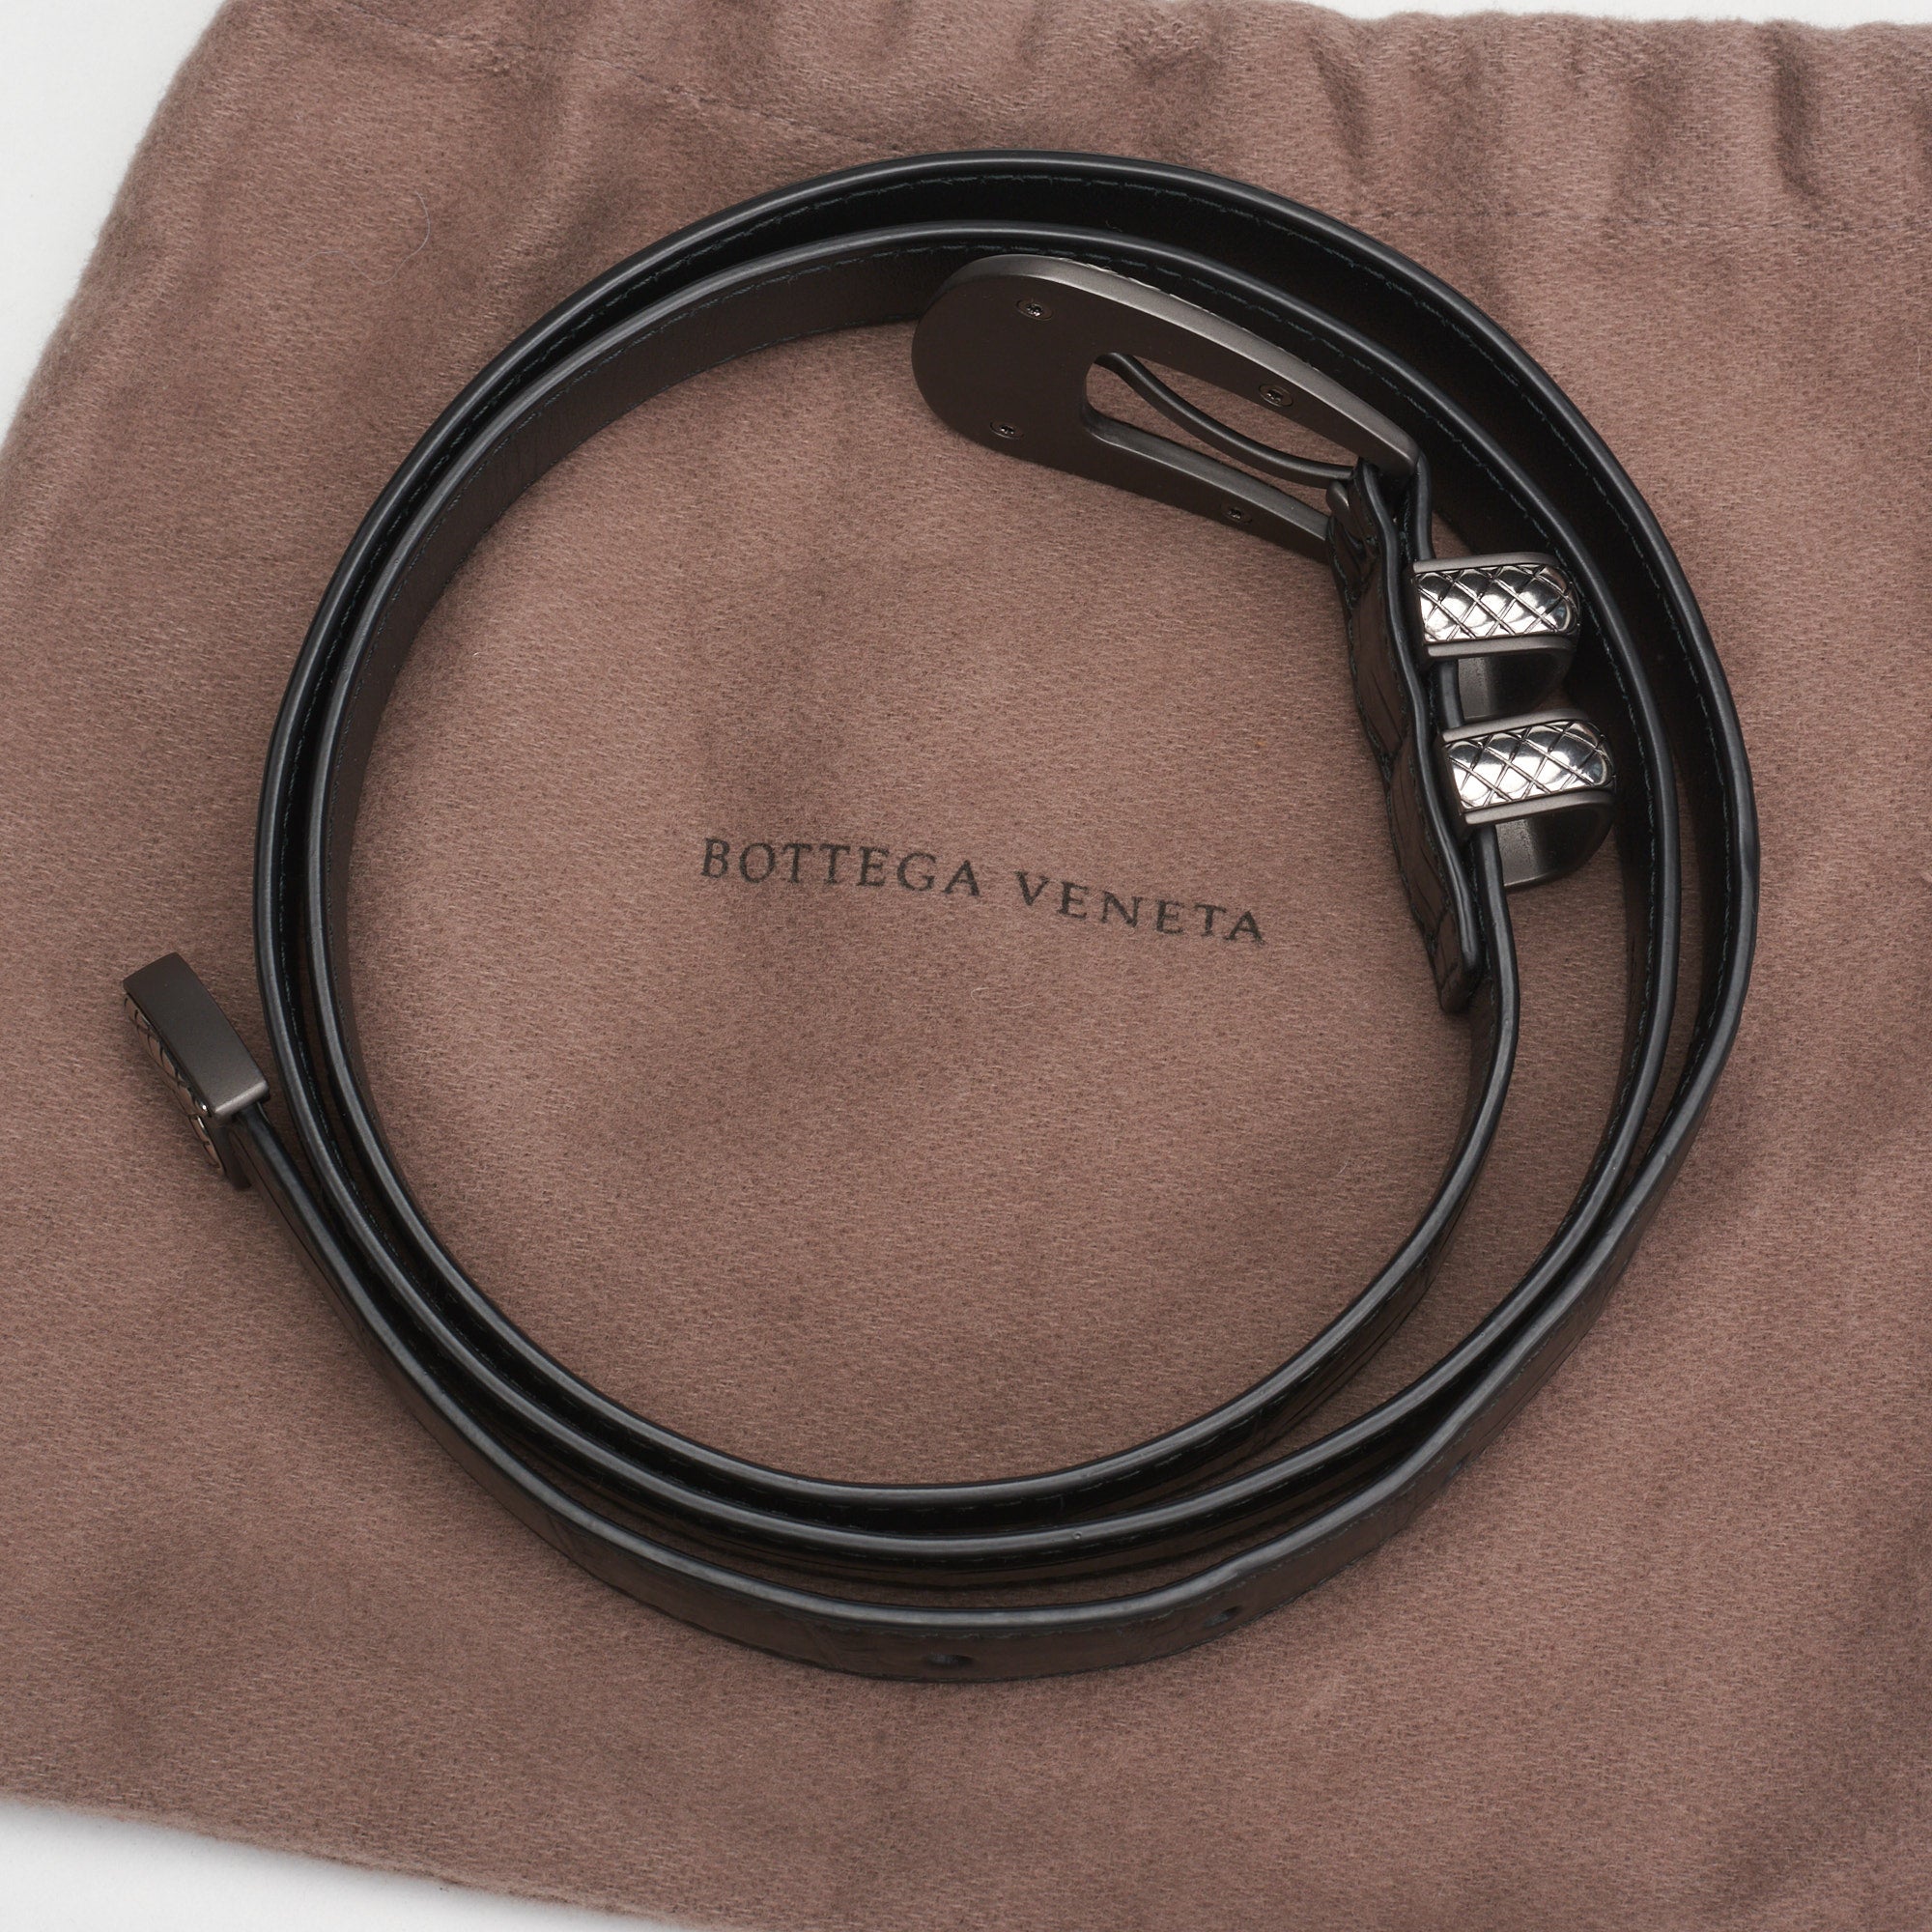 BOTTEGA VENETA Black Crocodile Belt 95cm NEW with Bag